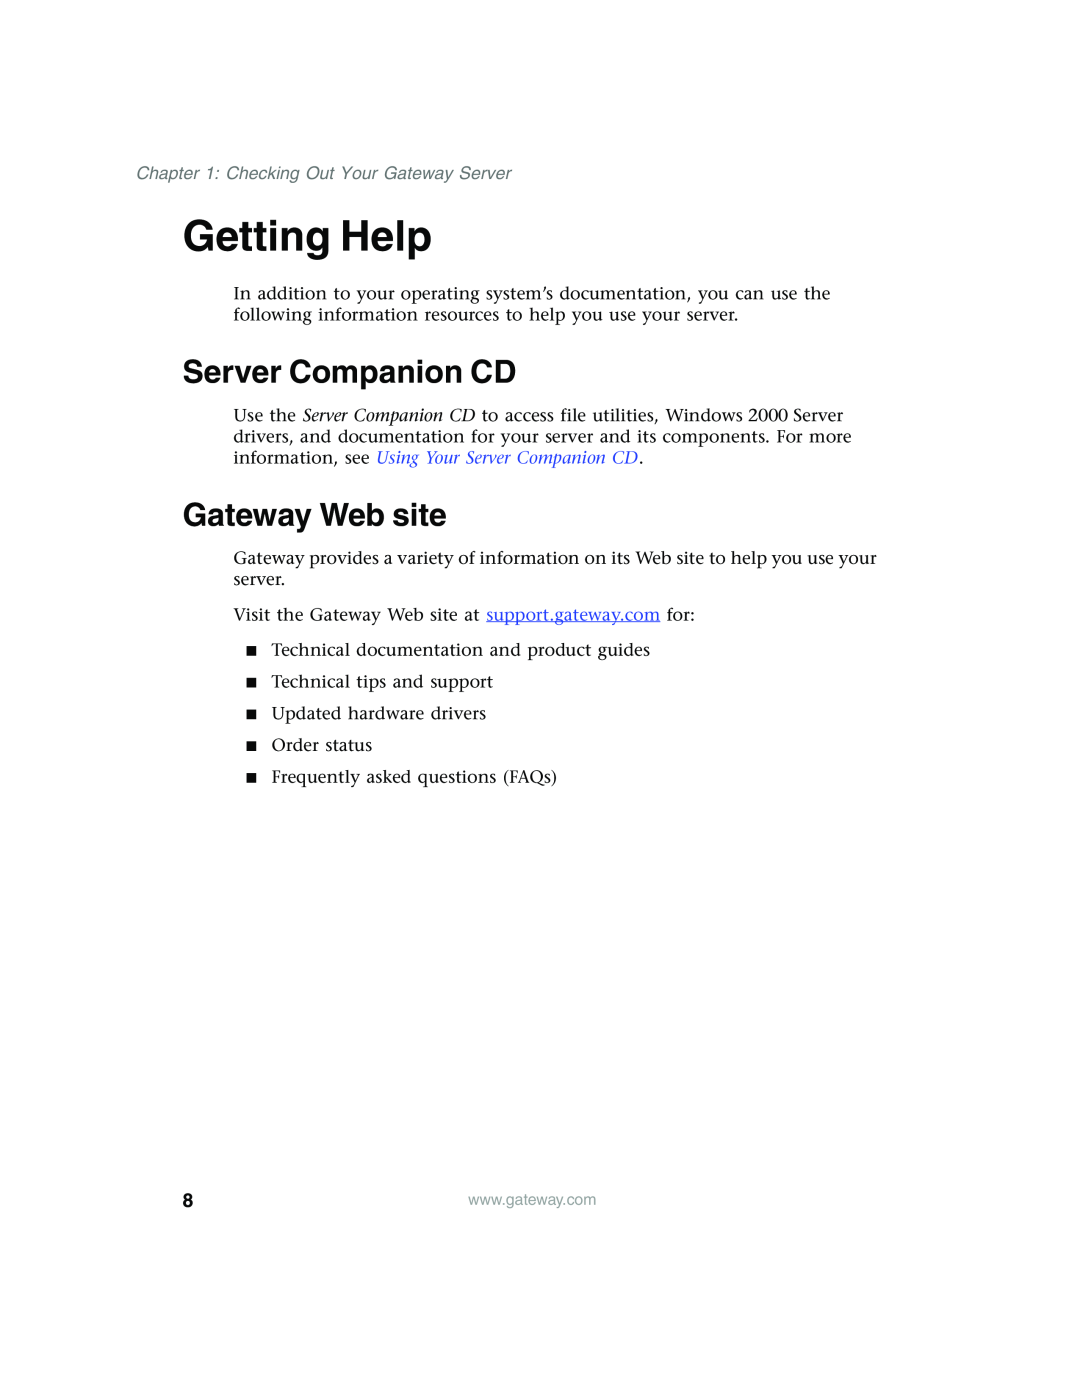 Gateway 980 manual Getting Help, Server Companion CD, Gateway Web site, Checking Out Your Gateway Server 